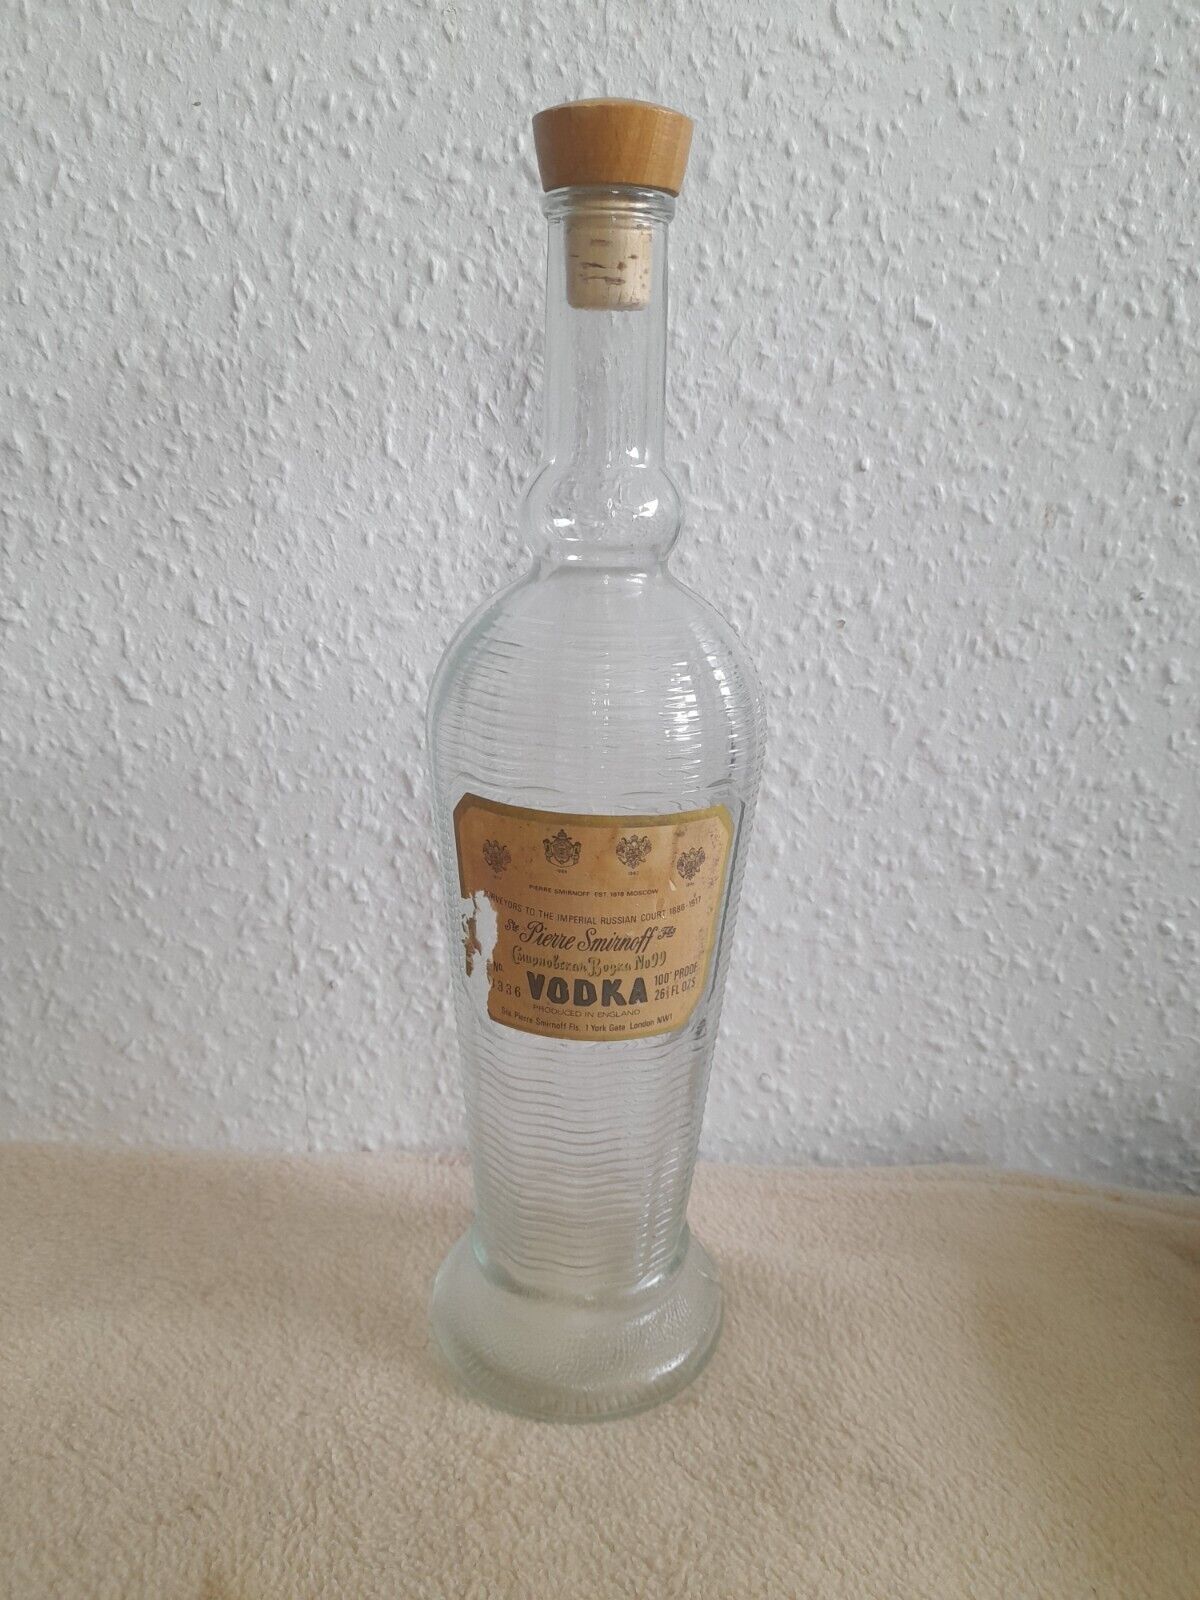 Vintage 33cm Tall St Pierrw Smirnoff Vodka Bottle (Produced In England) Empty. 